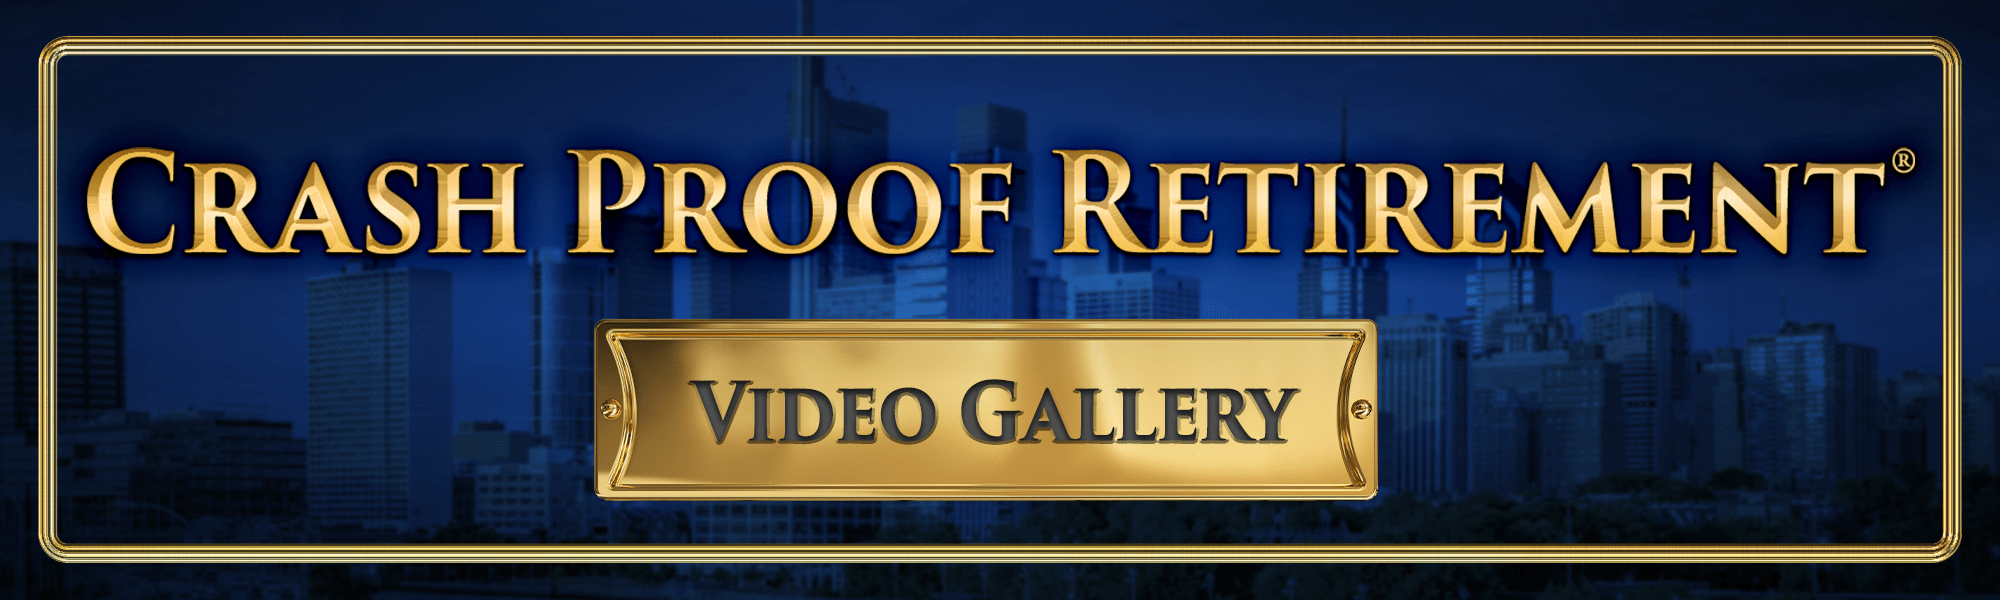 crash proof retirement video gallery